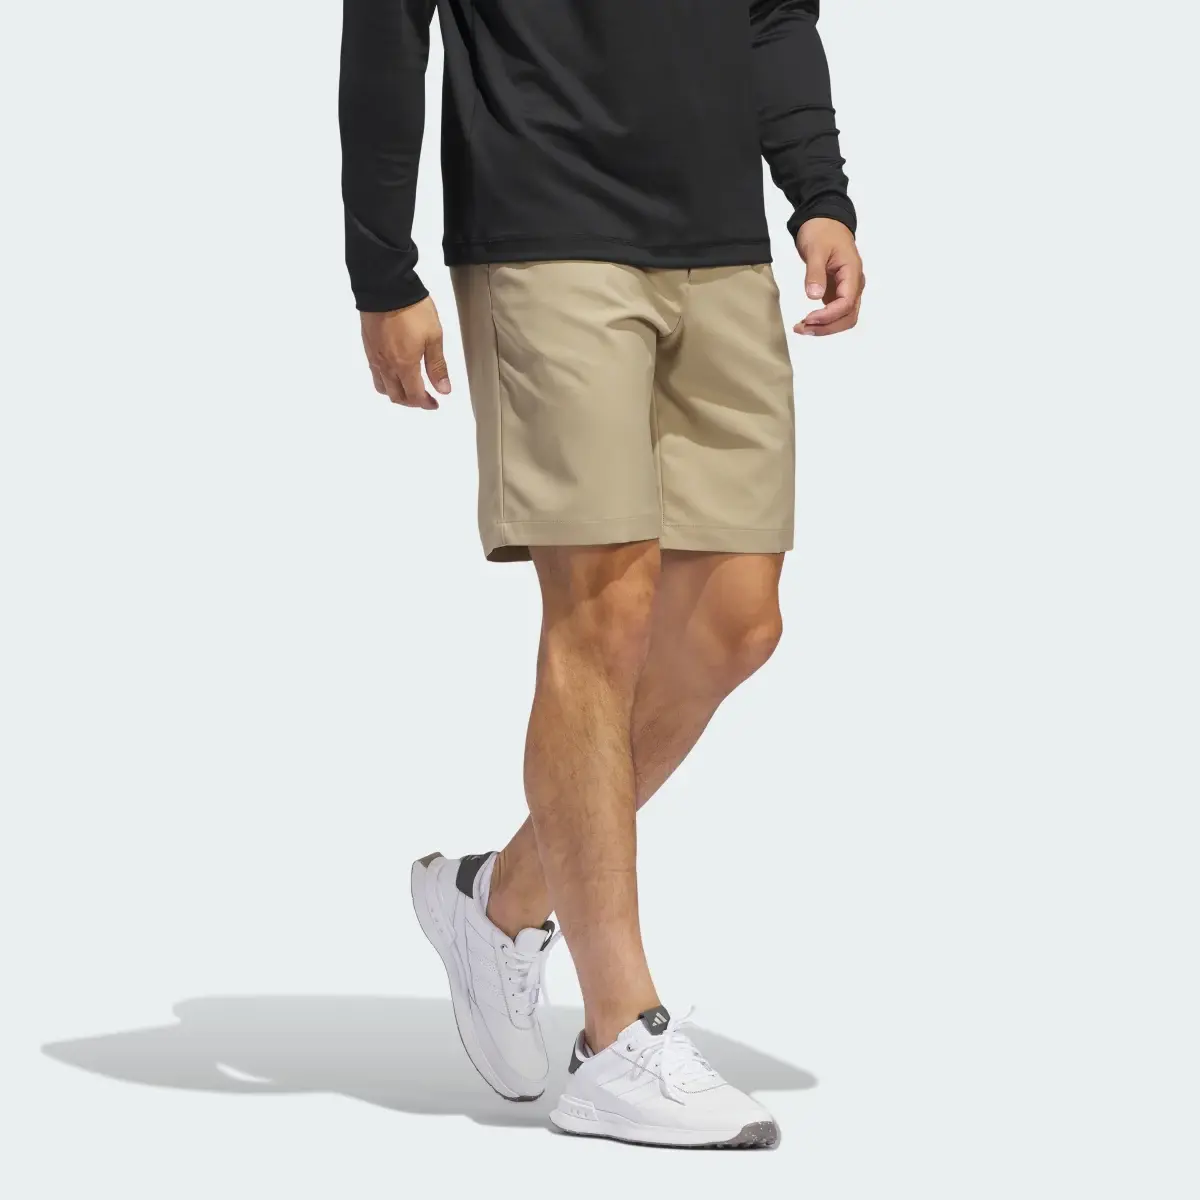 Adidas Adi Advantage Golf Shorts. 3